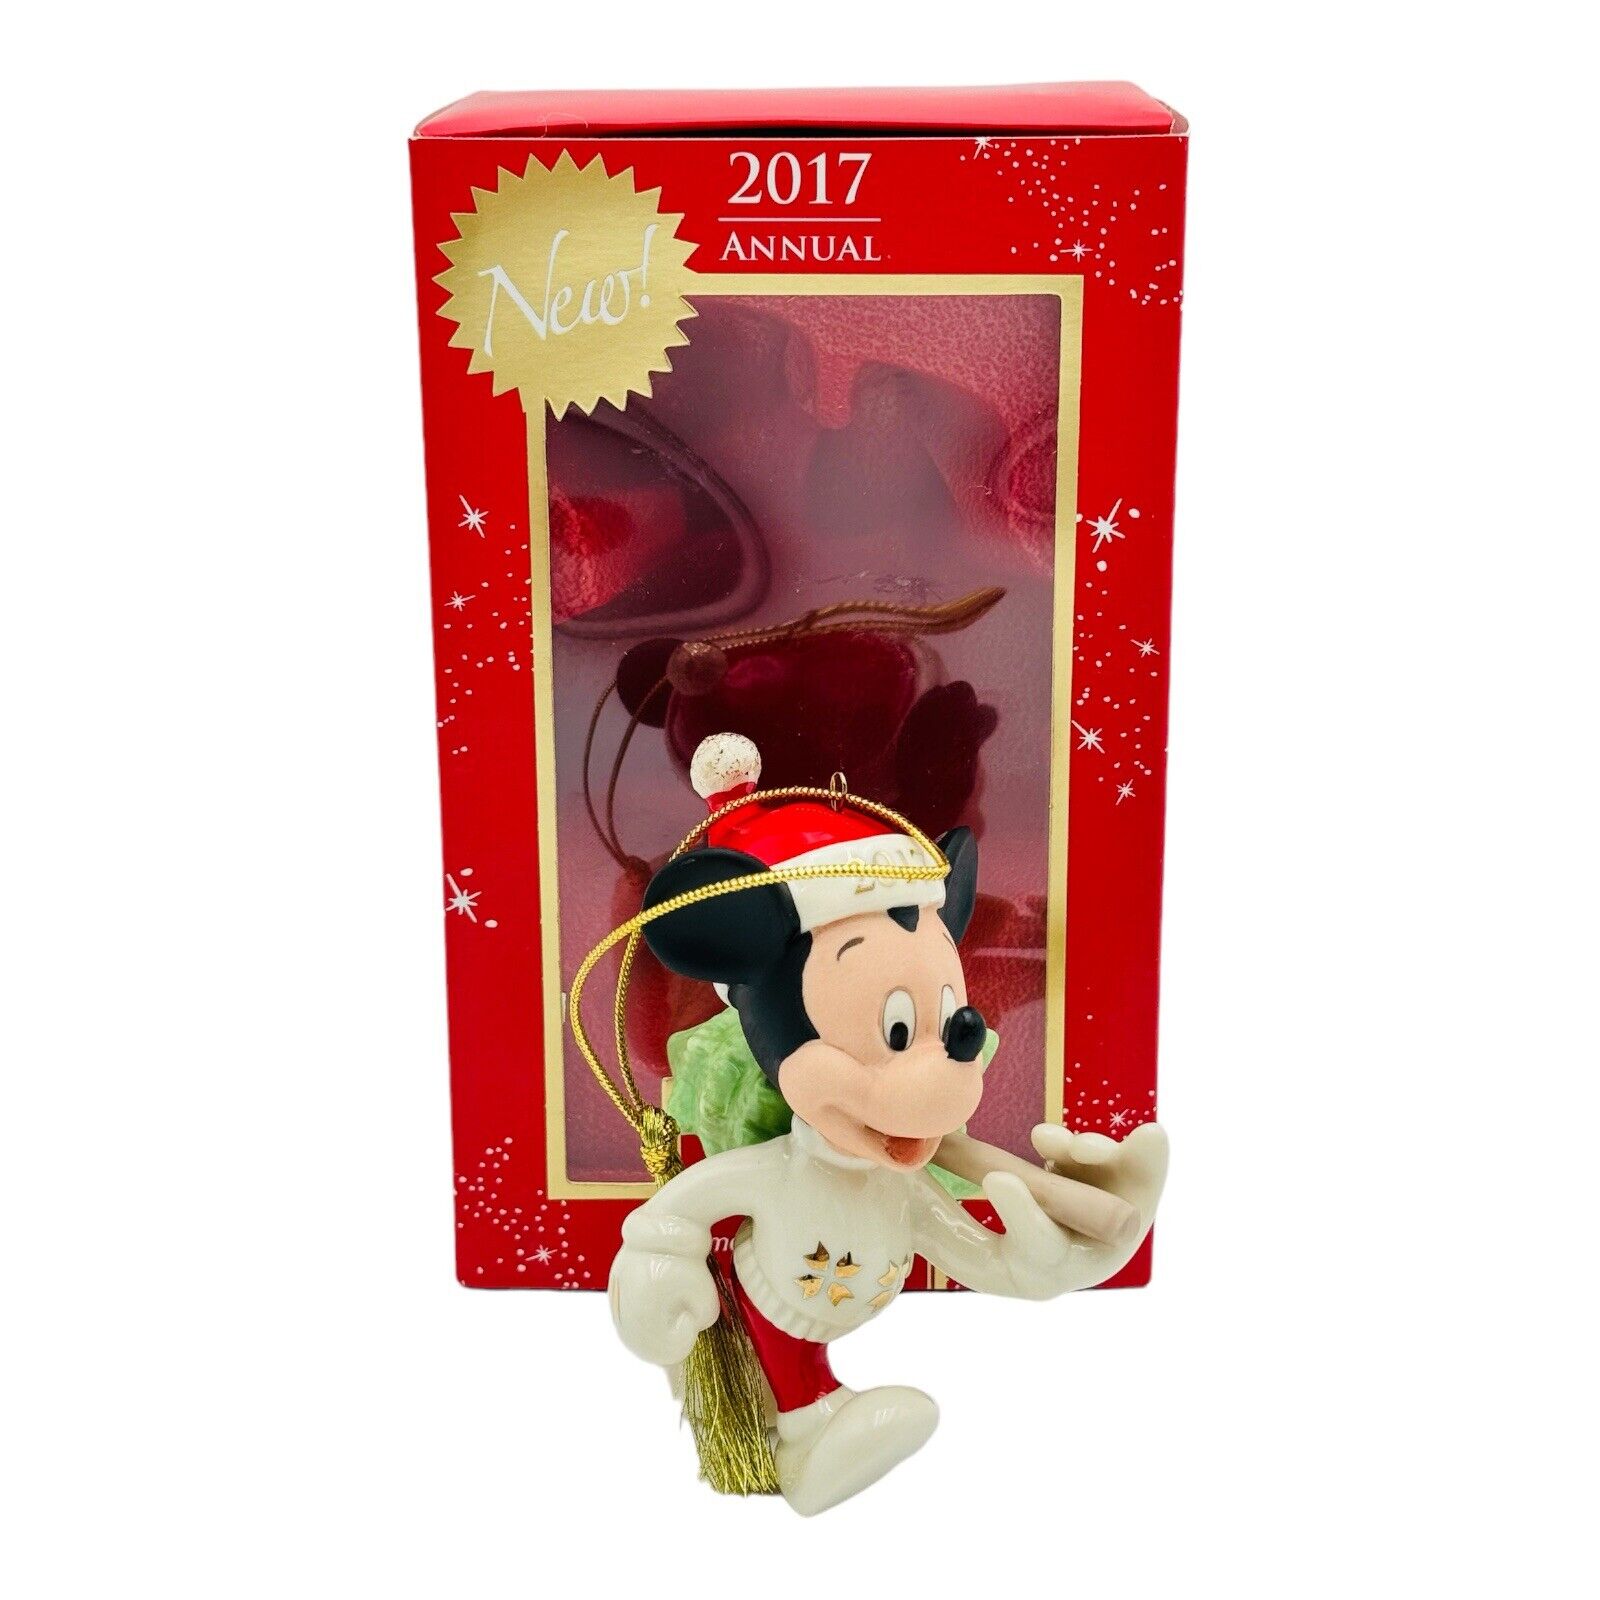 Lenox Disney 2017 Annual Trimming The Tree Mickey Ornament NEW IN BOX